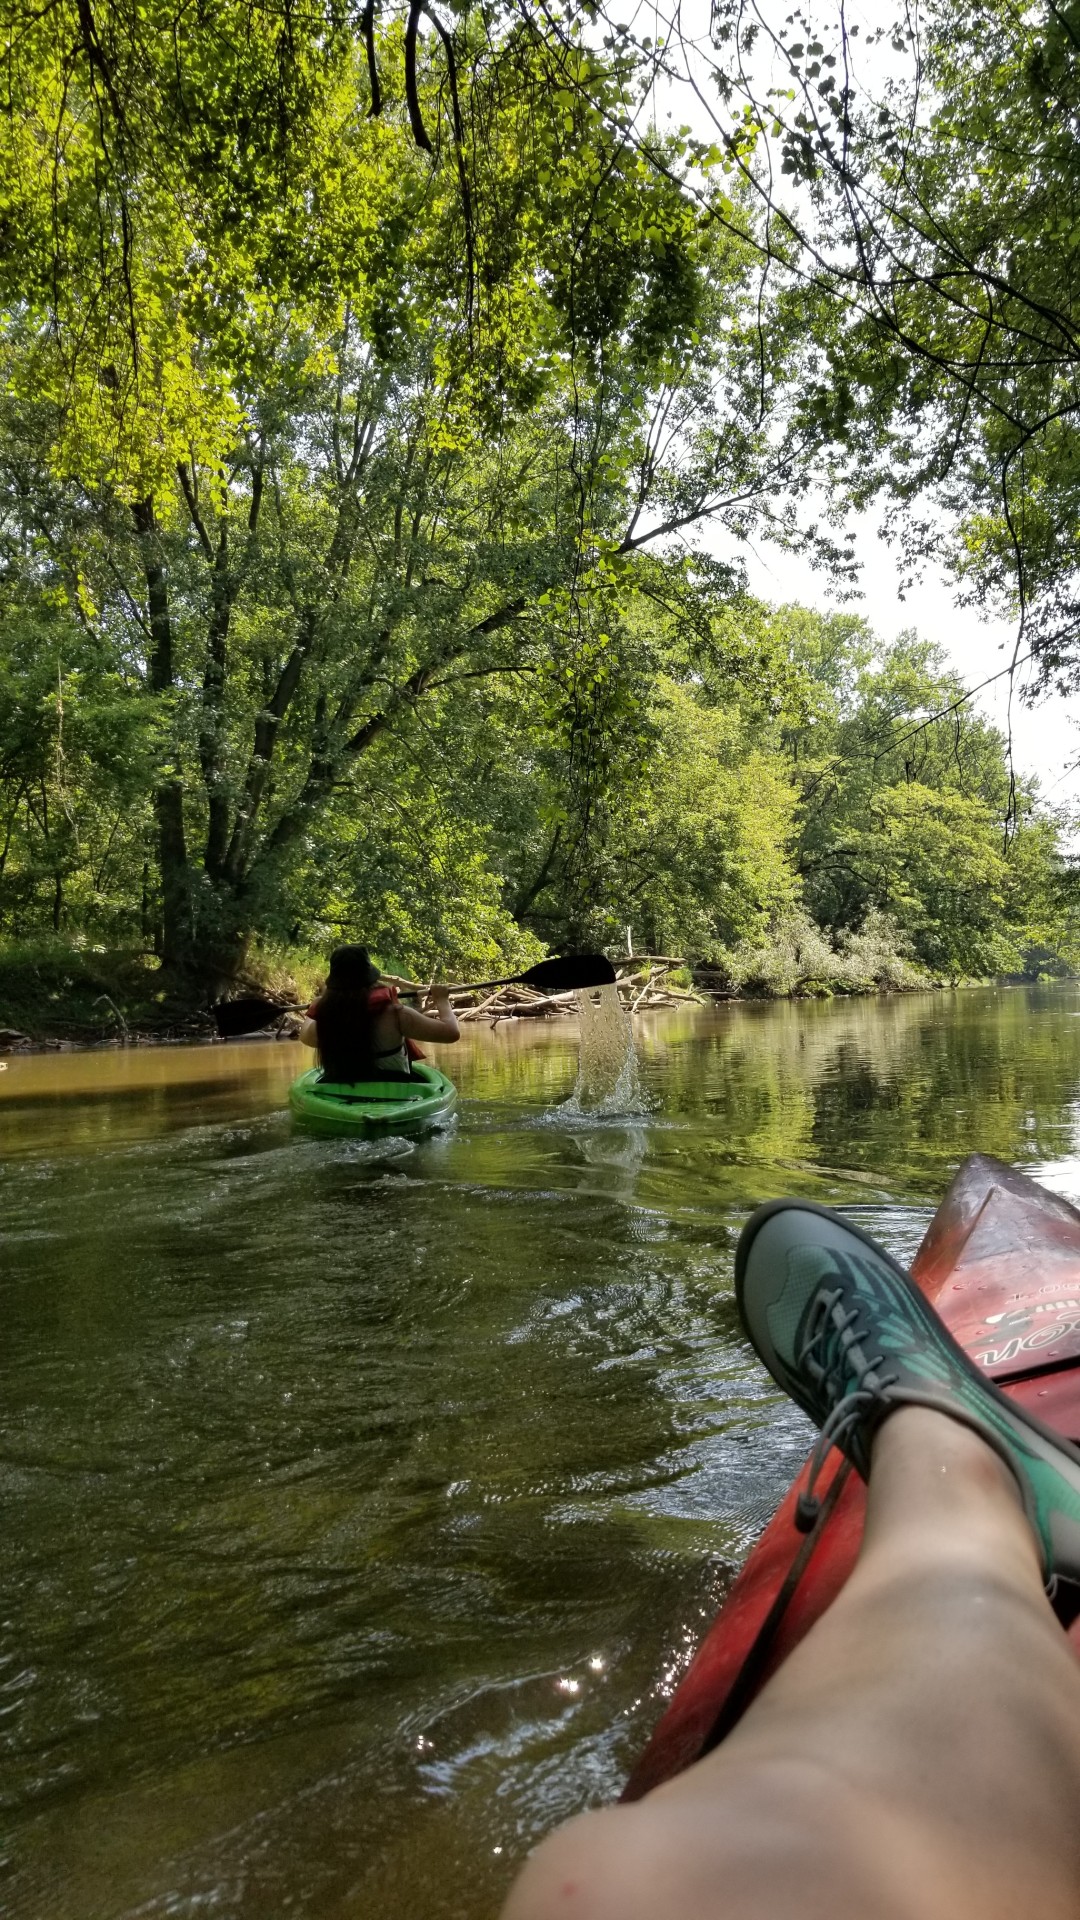 katiiie-lynn:Had a fun little trip kayaking adult photos